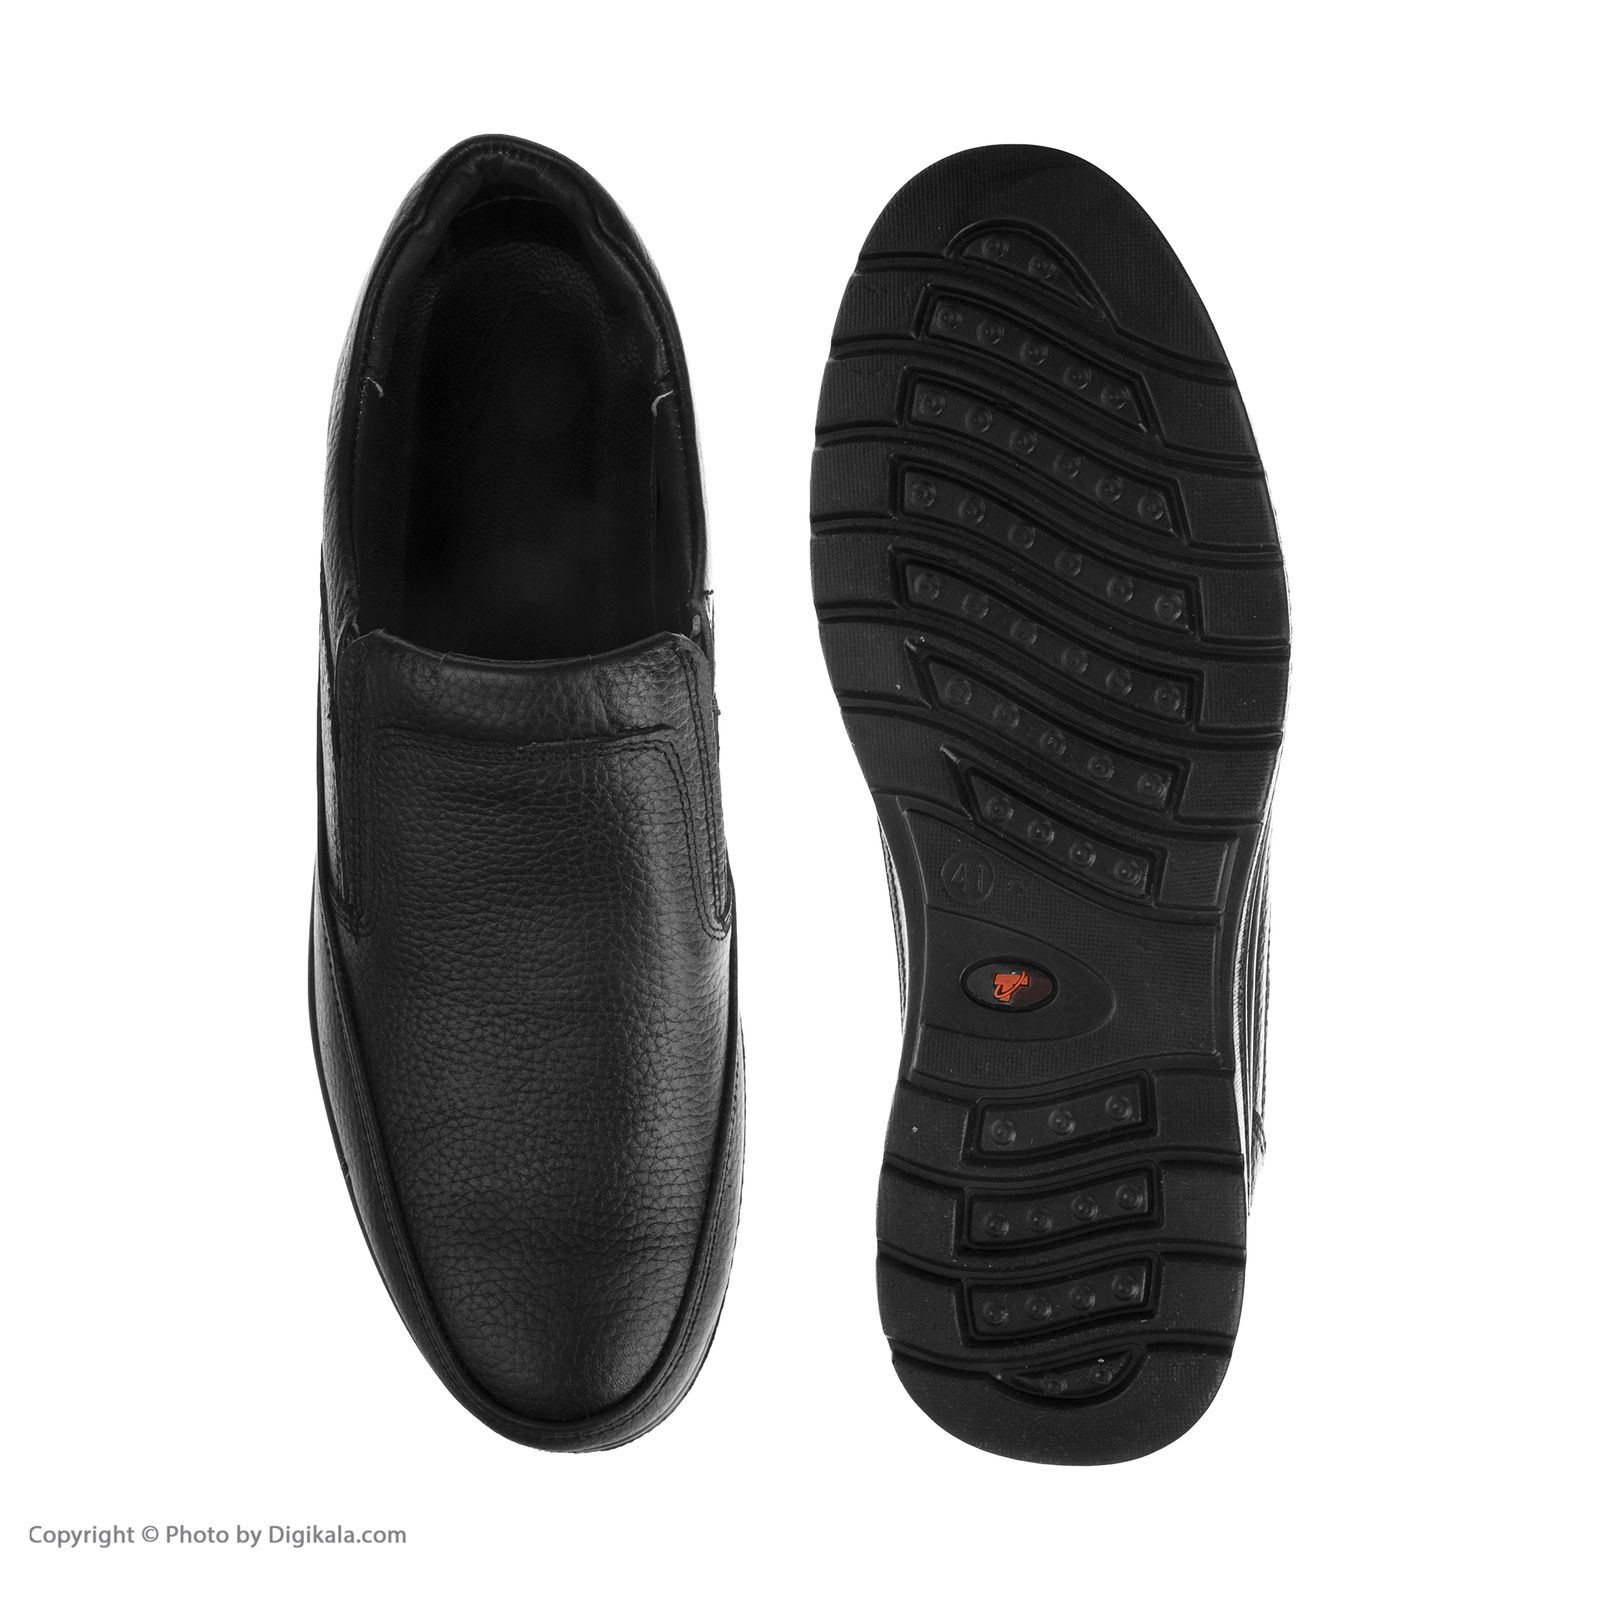 کفش روزمره مردانه شیفر مدل 7237a503101 - مشکی - 3